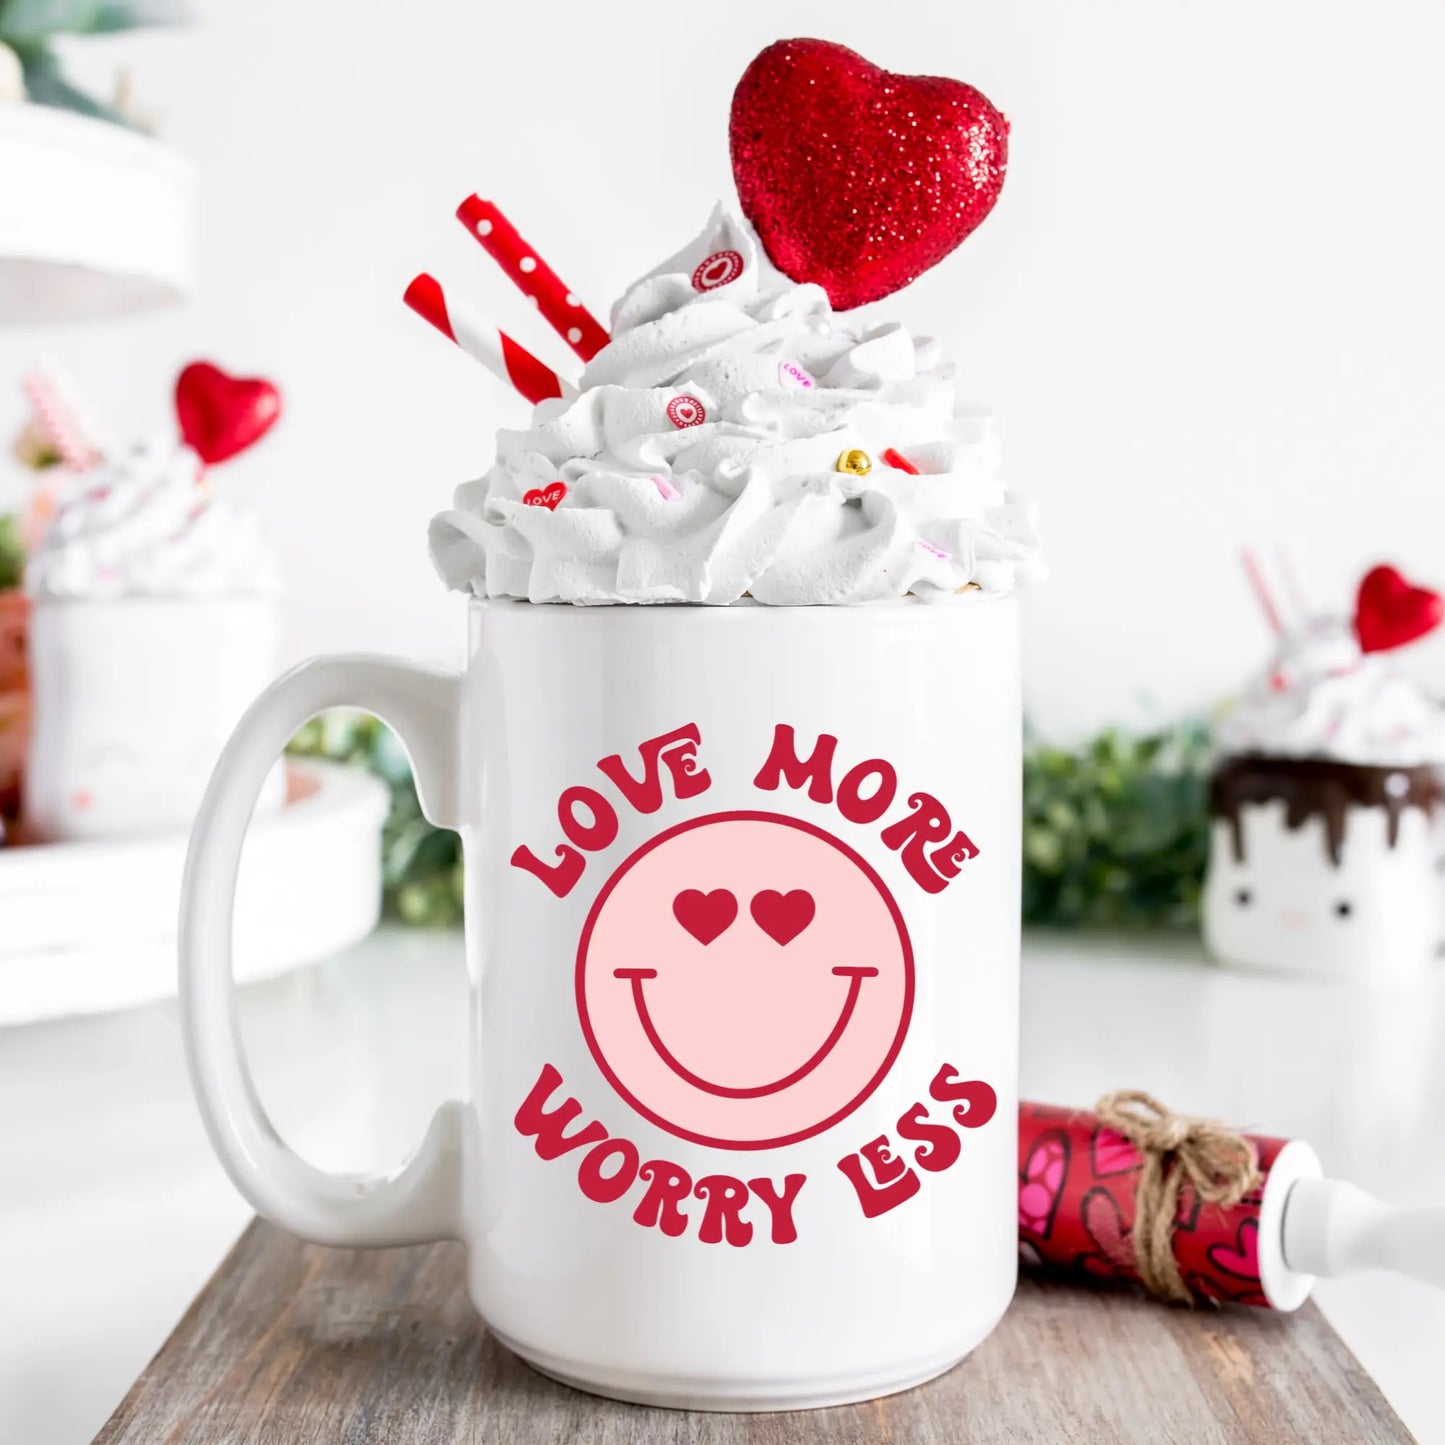 Love More Worry Less Coffee Mug